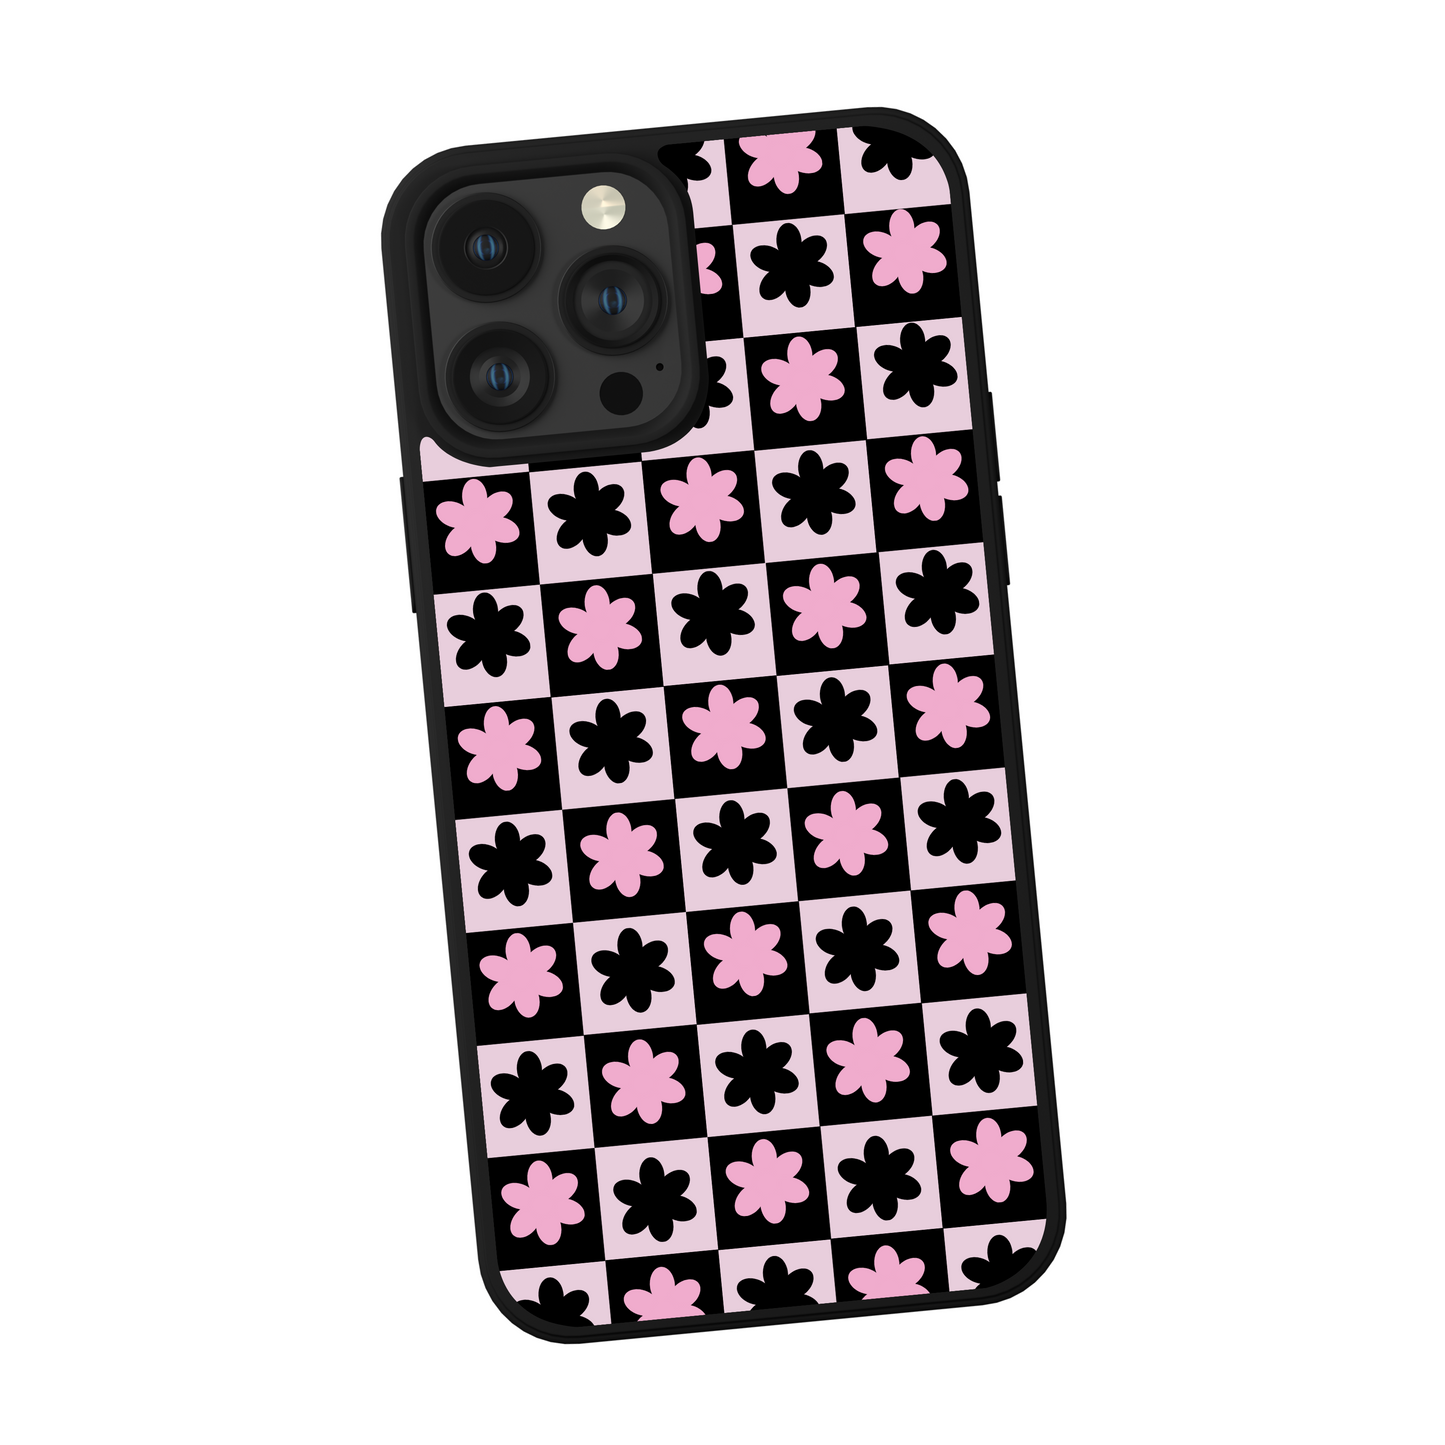 Checkered Flower iPhone Case